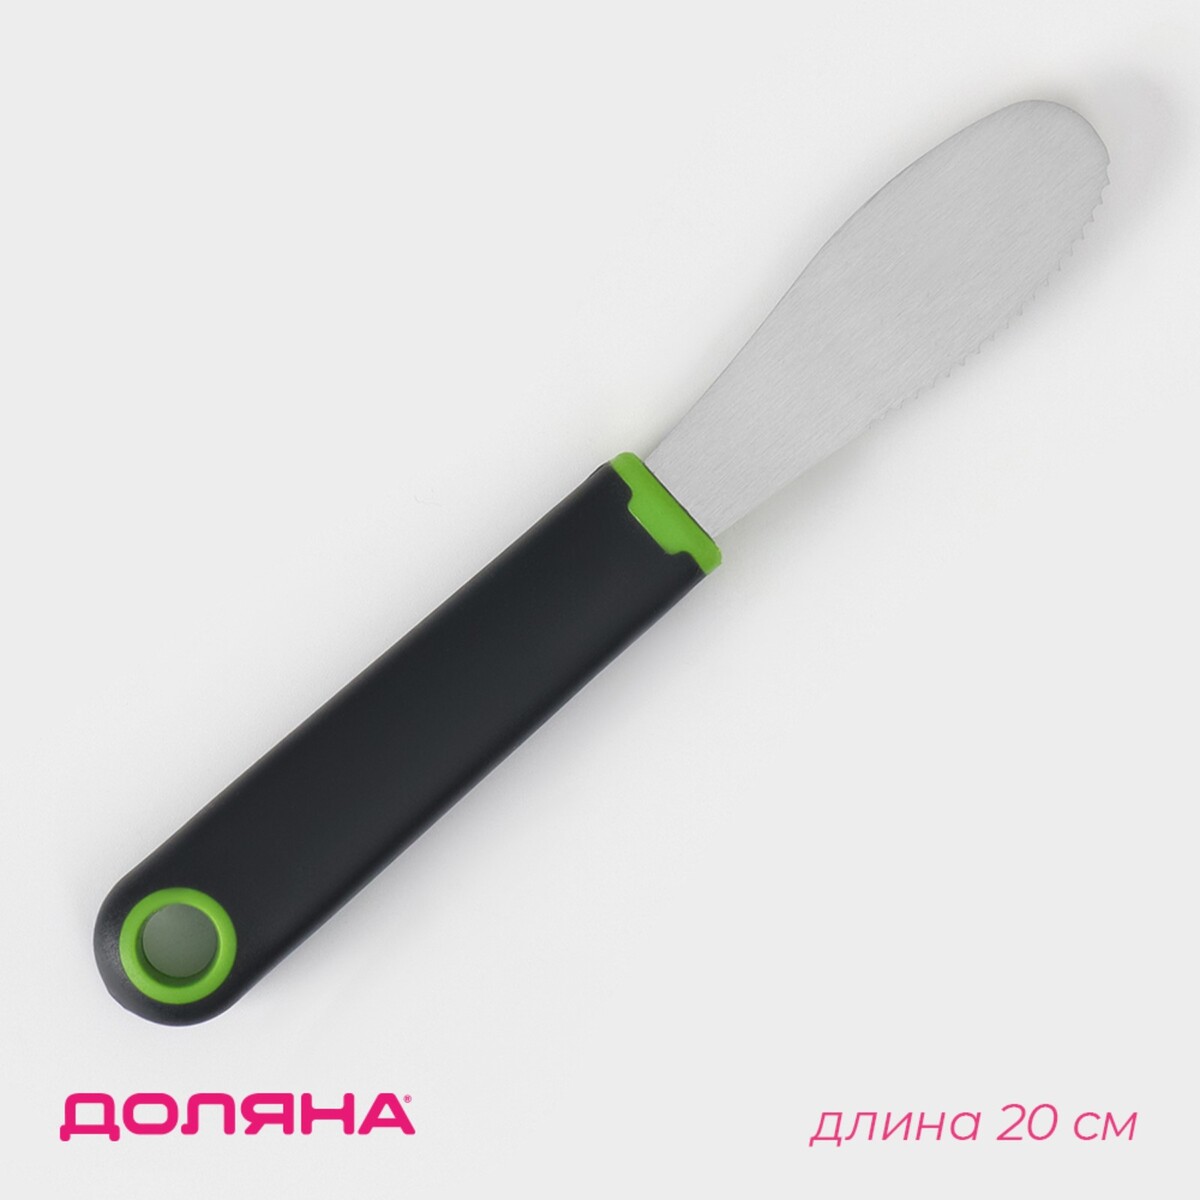 Нож для масла доляна lime, 20×3 см, цвет черно-зеленый